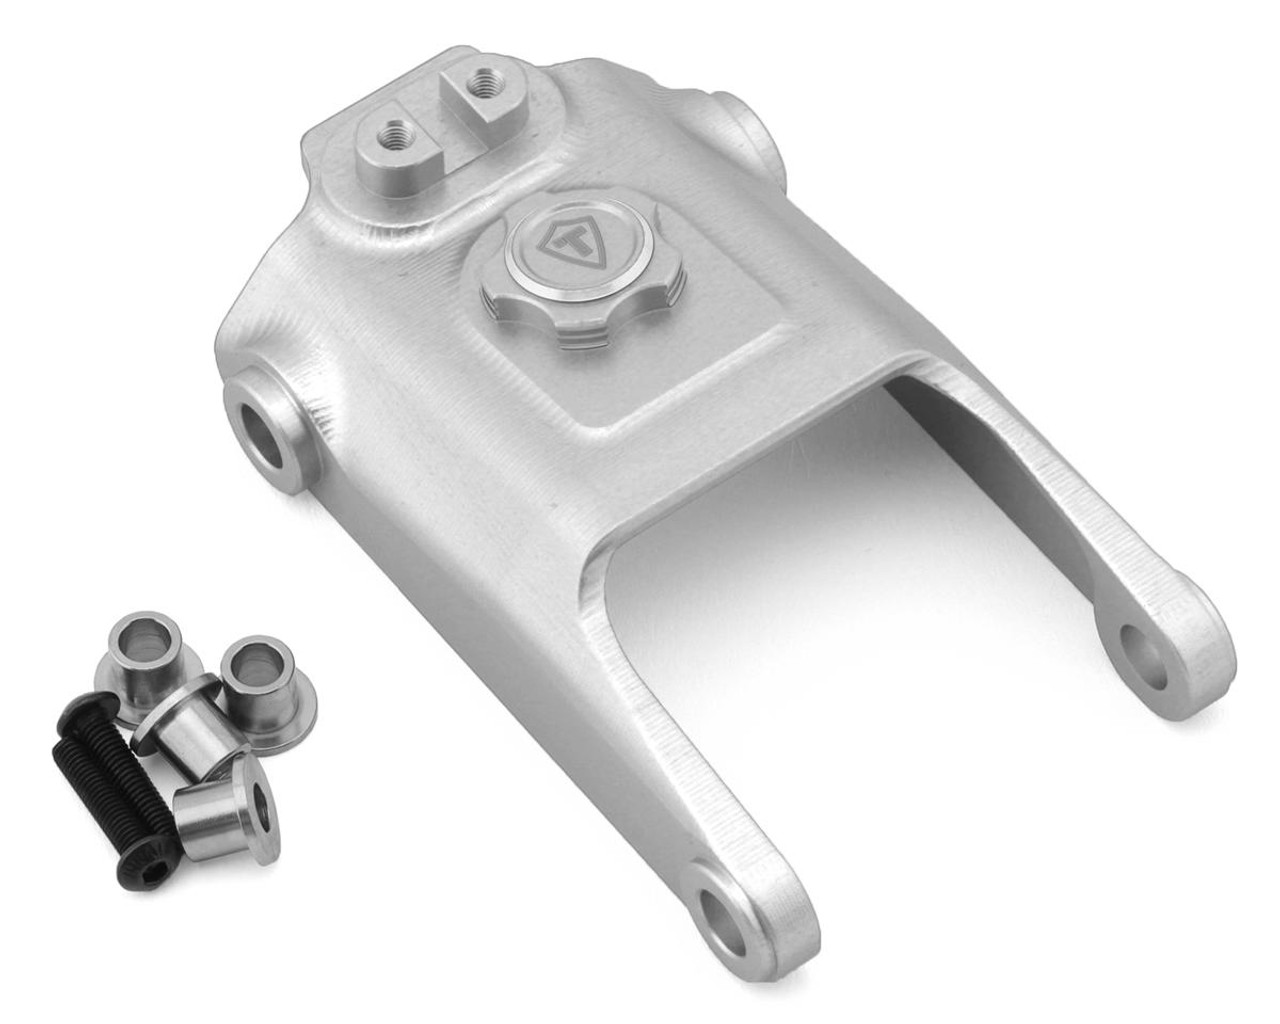 Treal Hobby Losi Promoto MX CNC Aluminum Servo Protector (Silver)